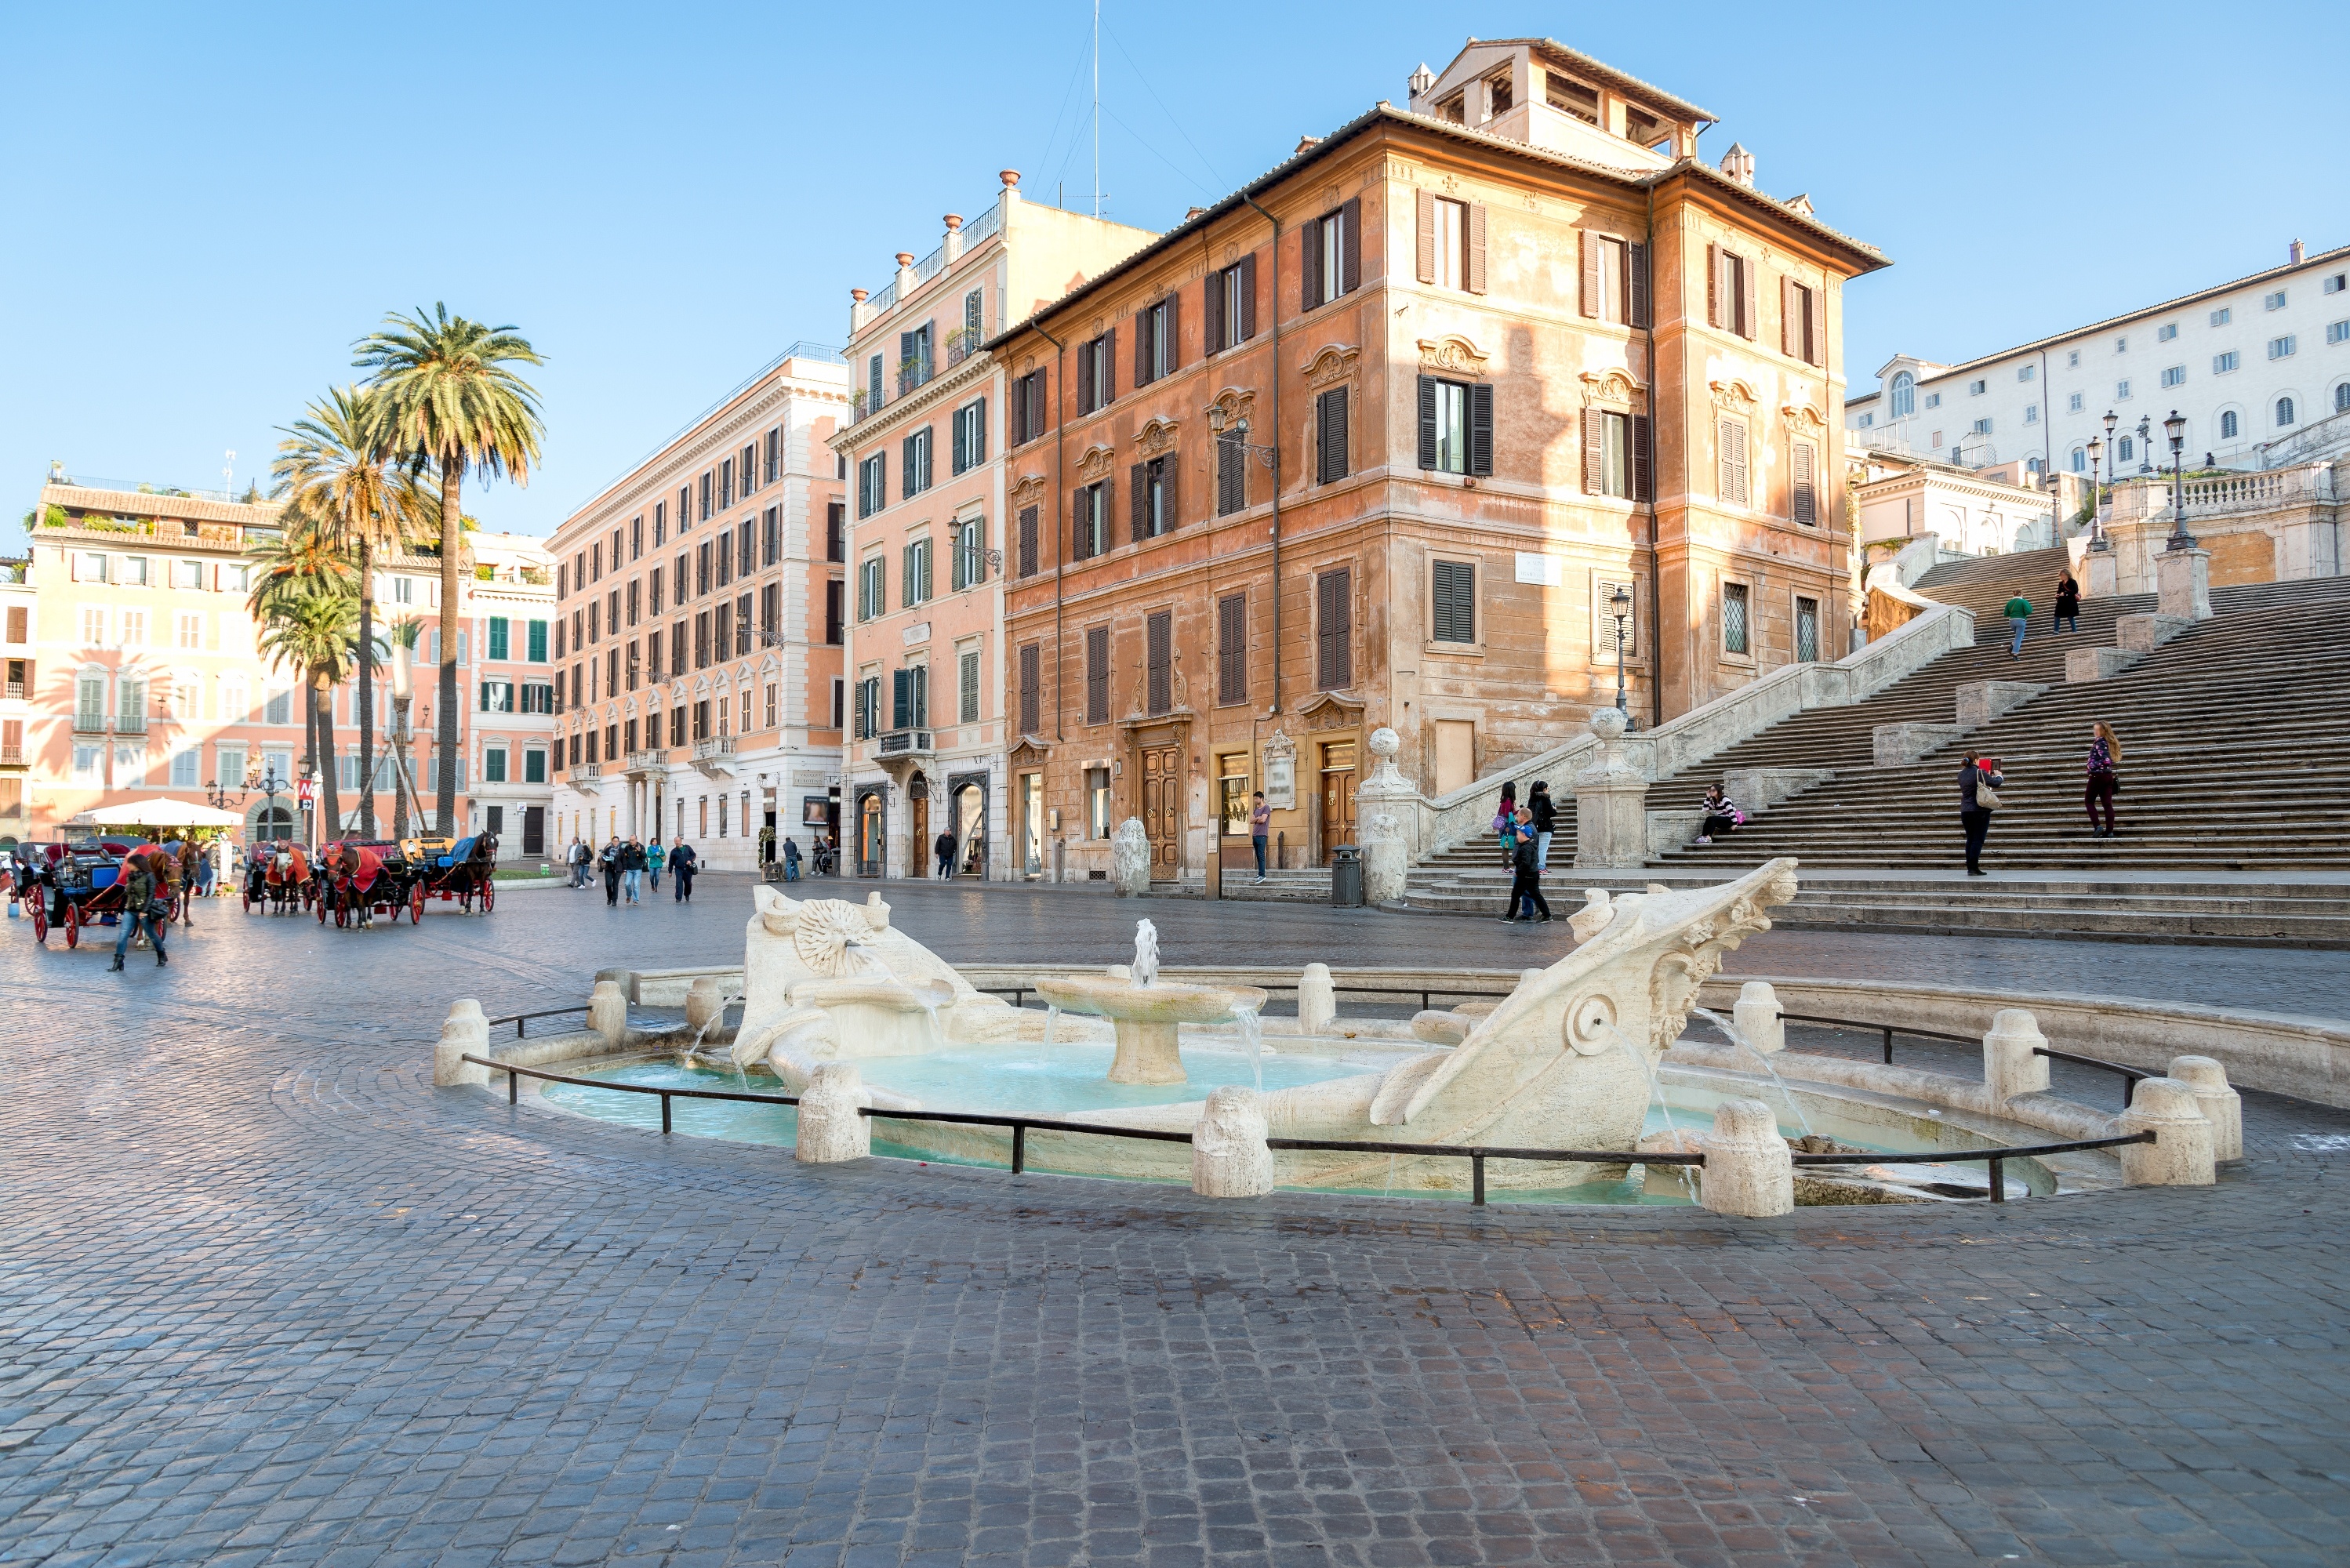 Fontana Barcaccia - Attraktion in Rom, 3000x2000 HD Desktop